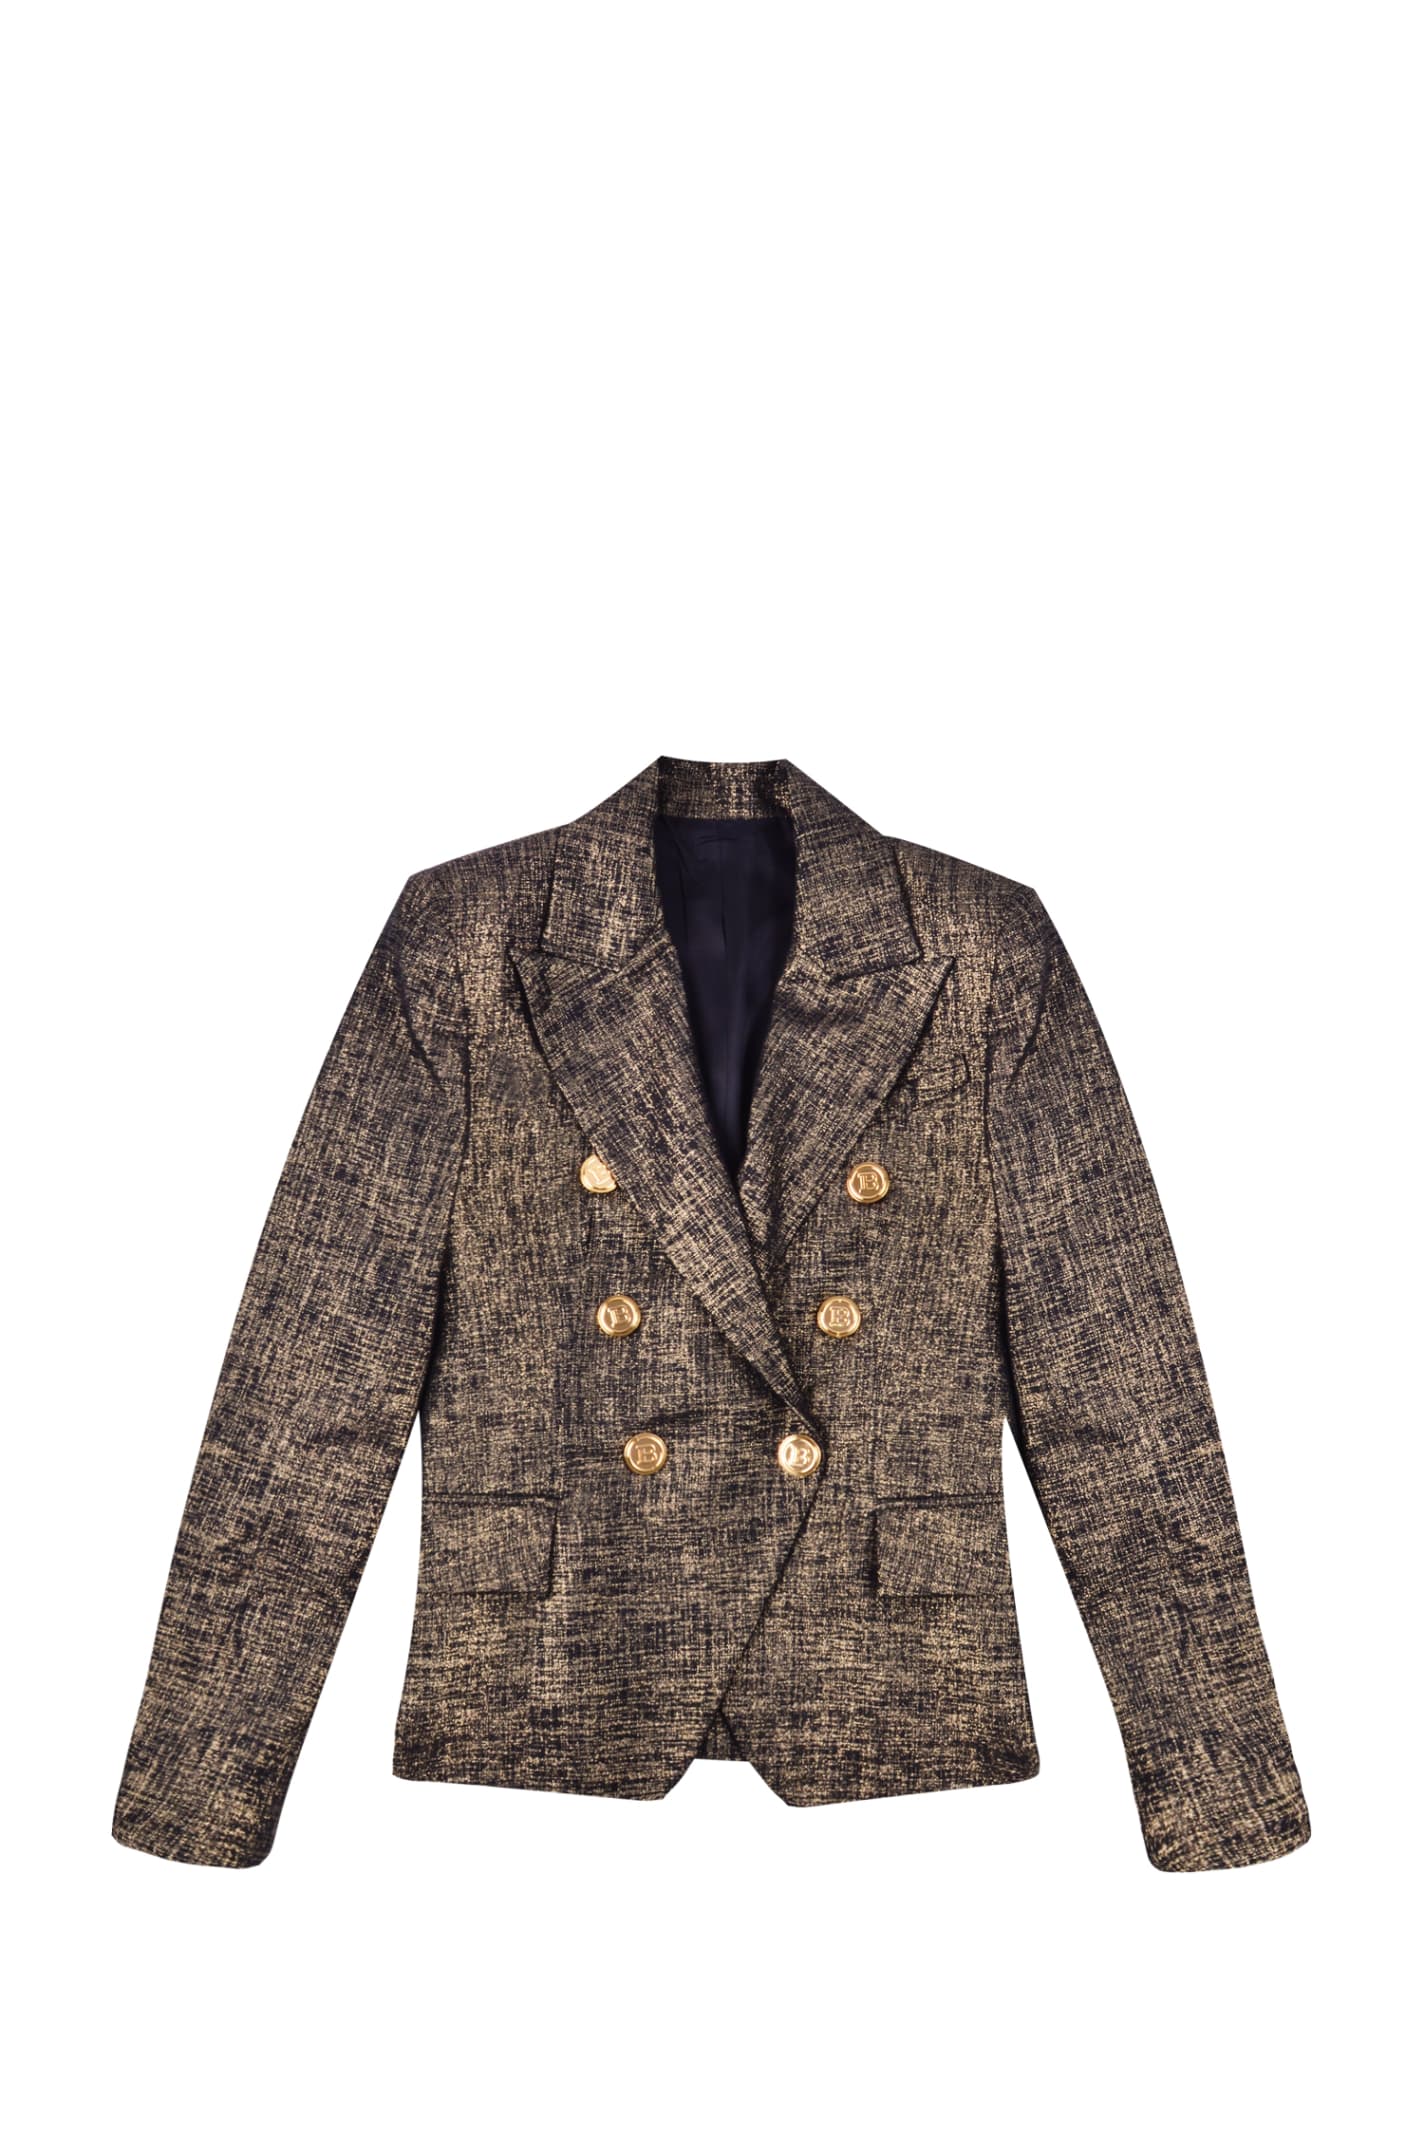 Balmain Double Breasted Wool Blend Jacket